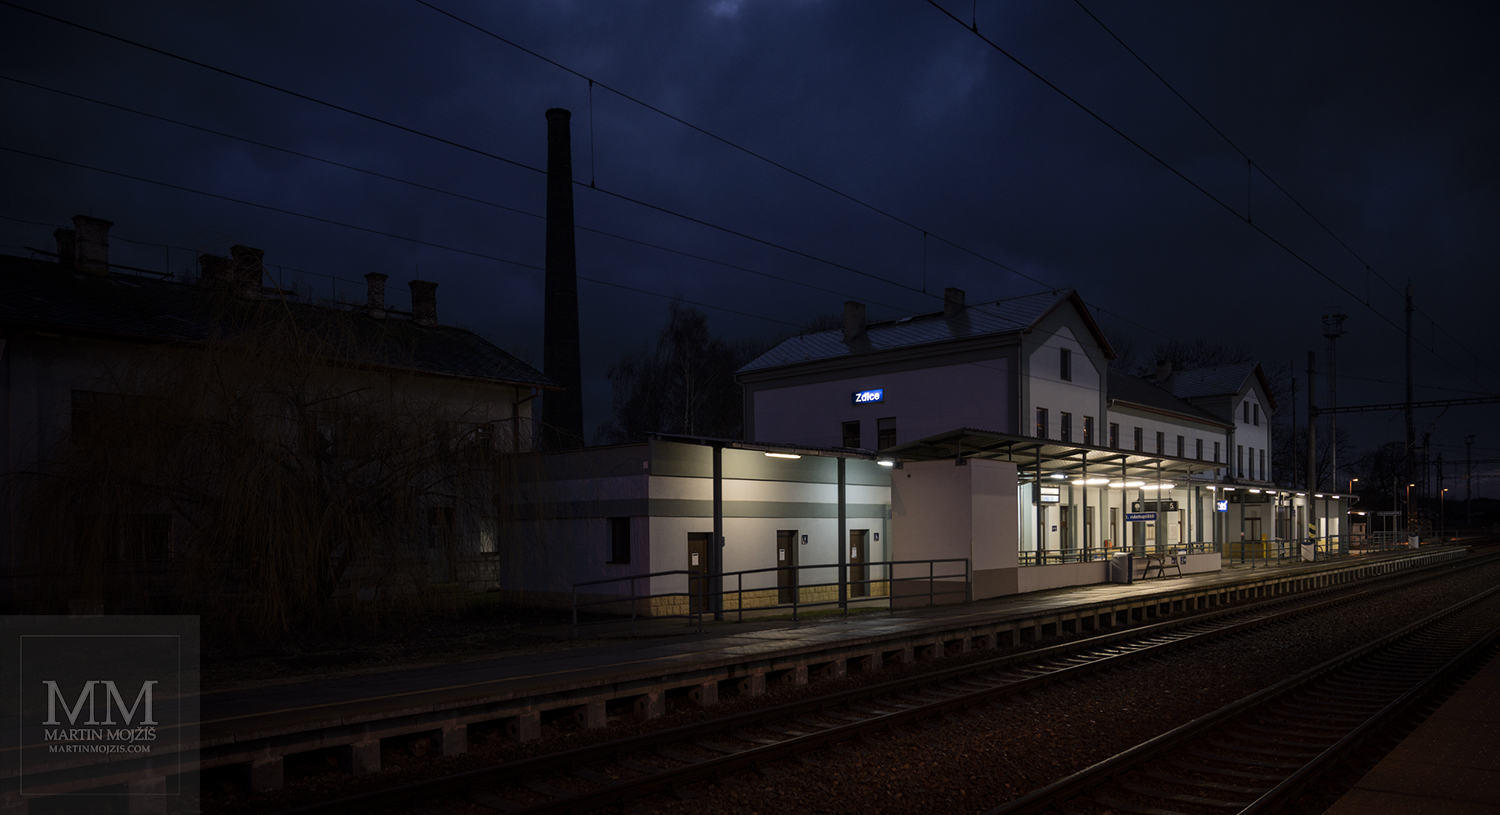 Zdice railway station, main station building.